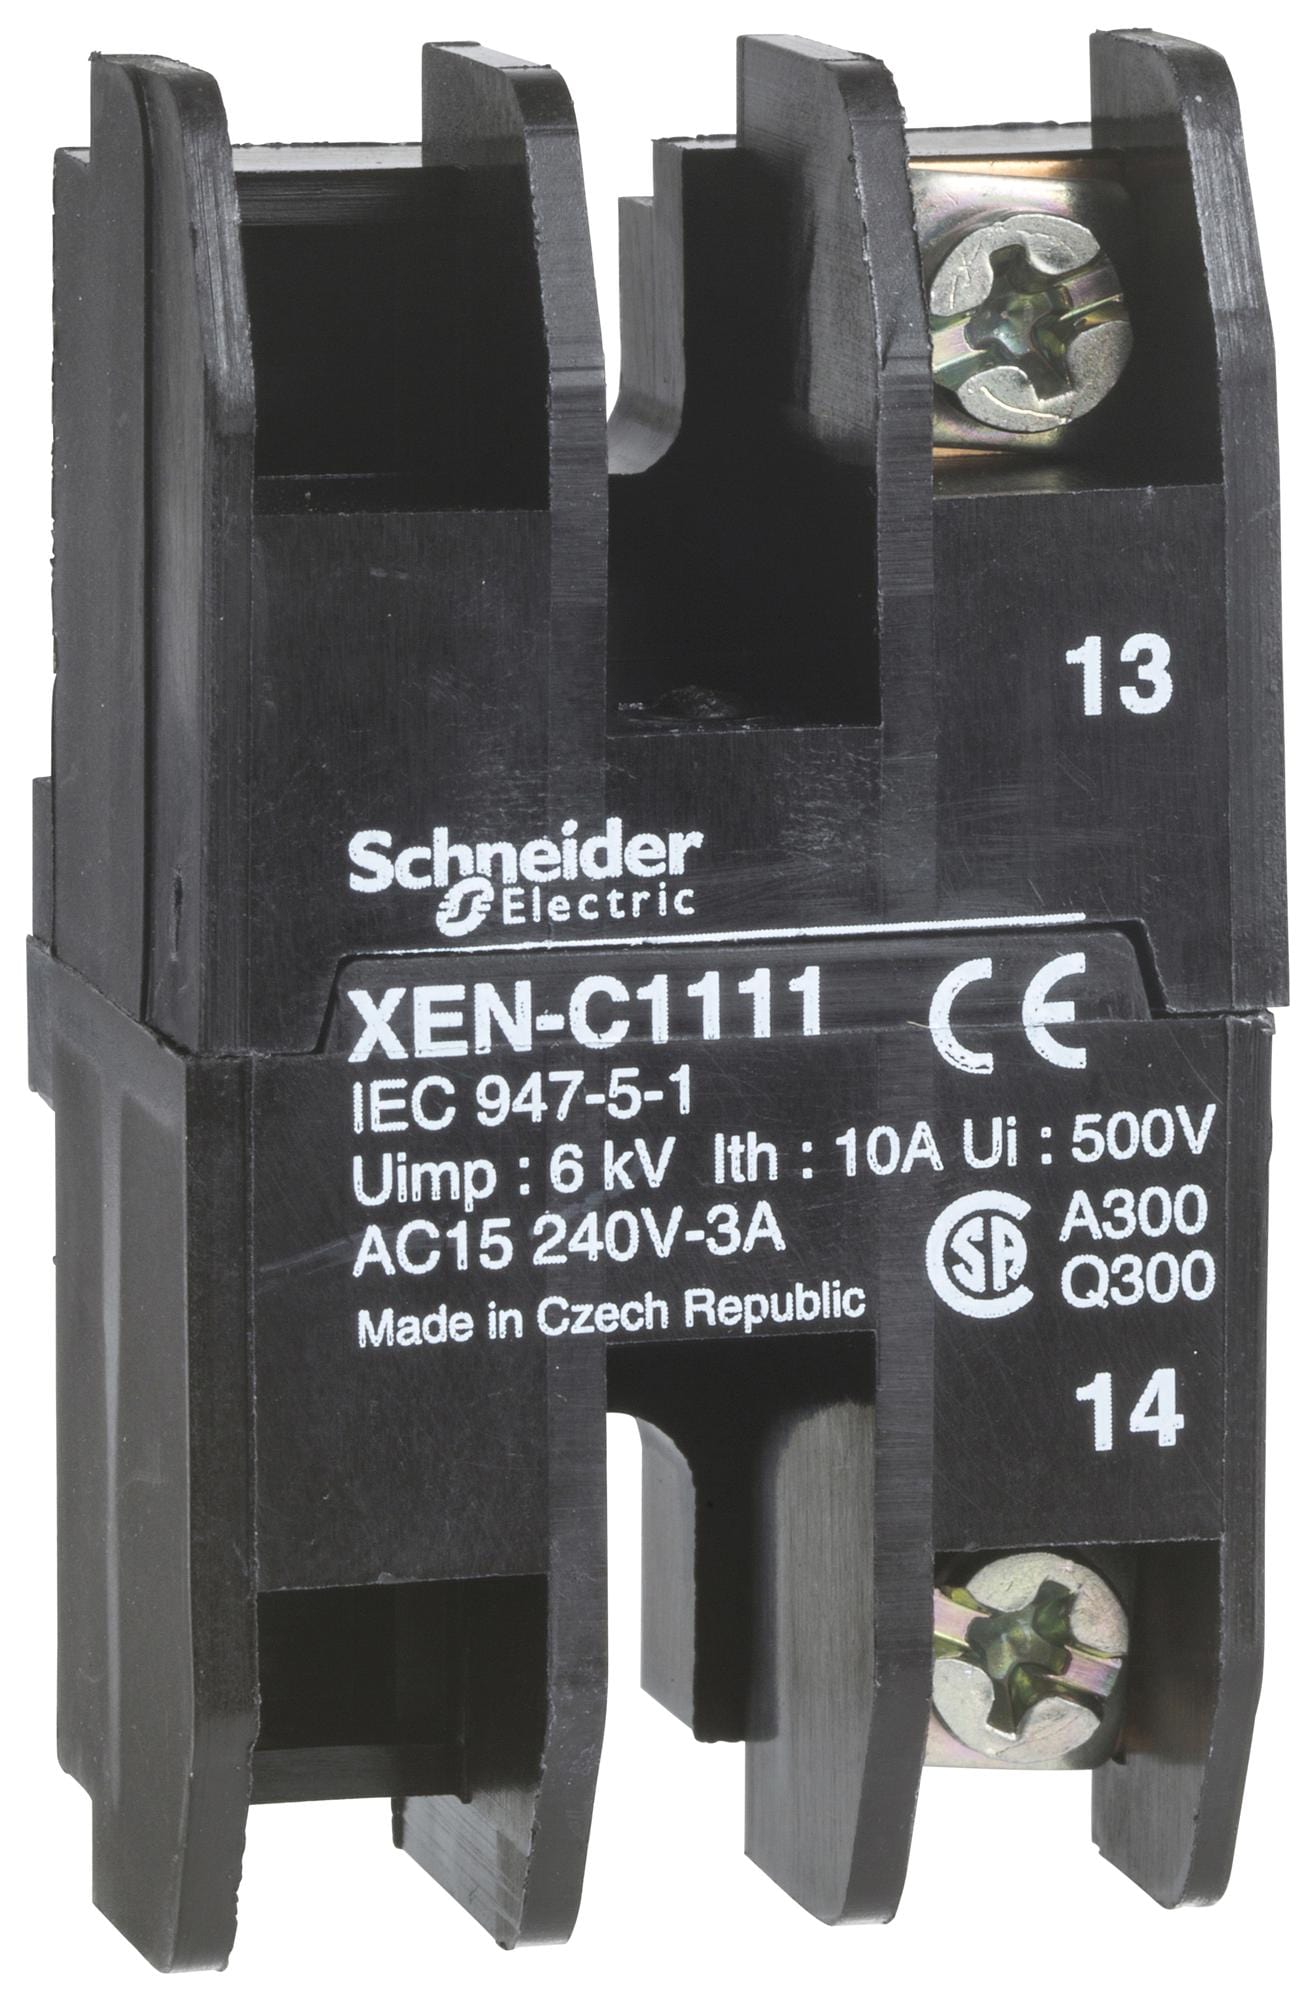 SCHNEIDER ELECTRIC Contact Blocks XENC1111 CONTACT BLOCK, 3A, 240VAC, SCREW CLAMP SCHNEIDER ELECTRIC 3114846 XENC1111